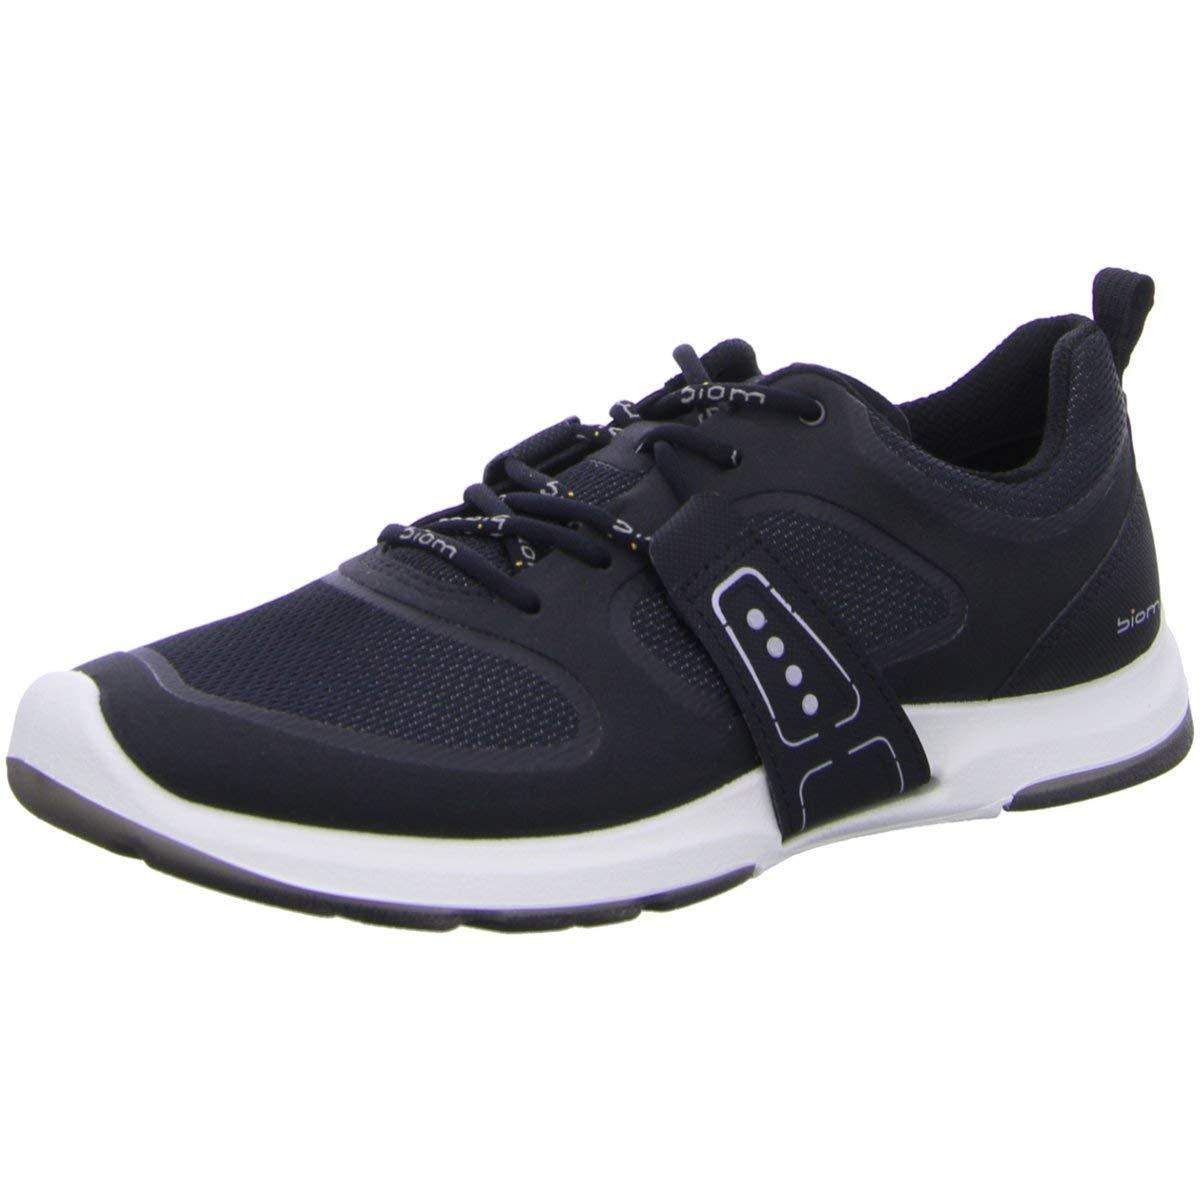 Ecco Biom Amrap Band Fitness Shoes in Black/Black (Black) - Save 41% - Lyst